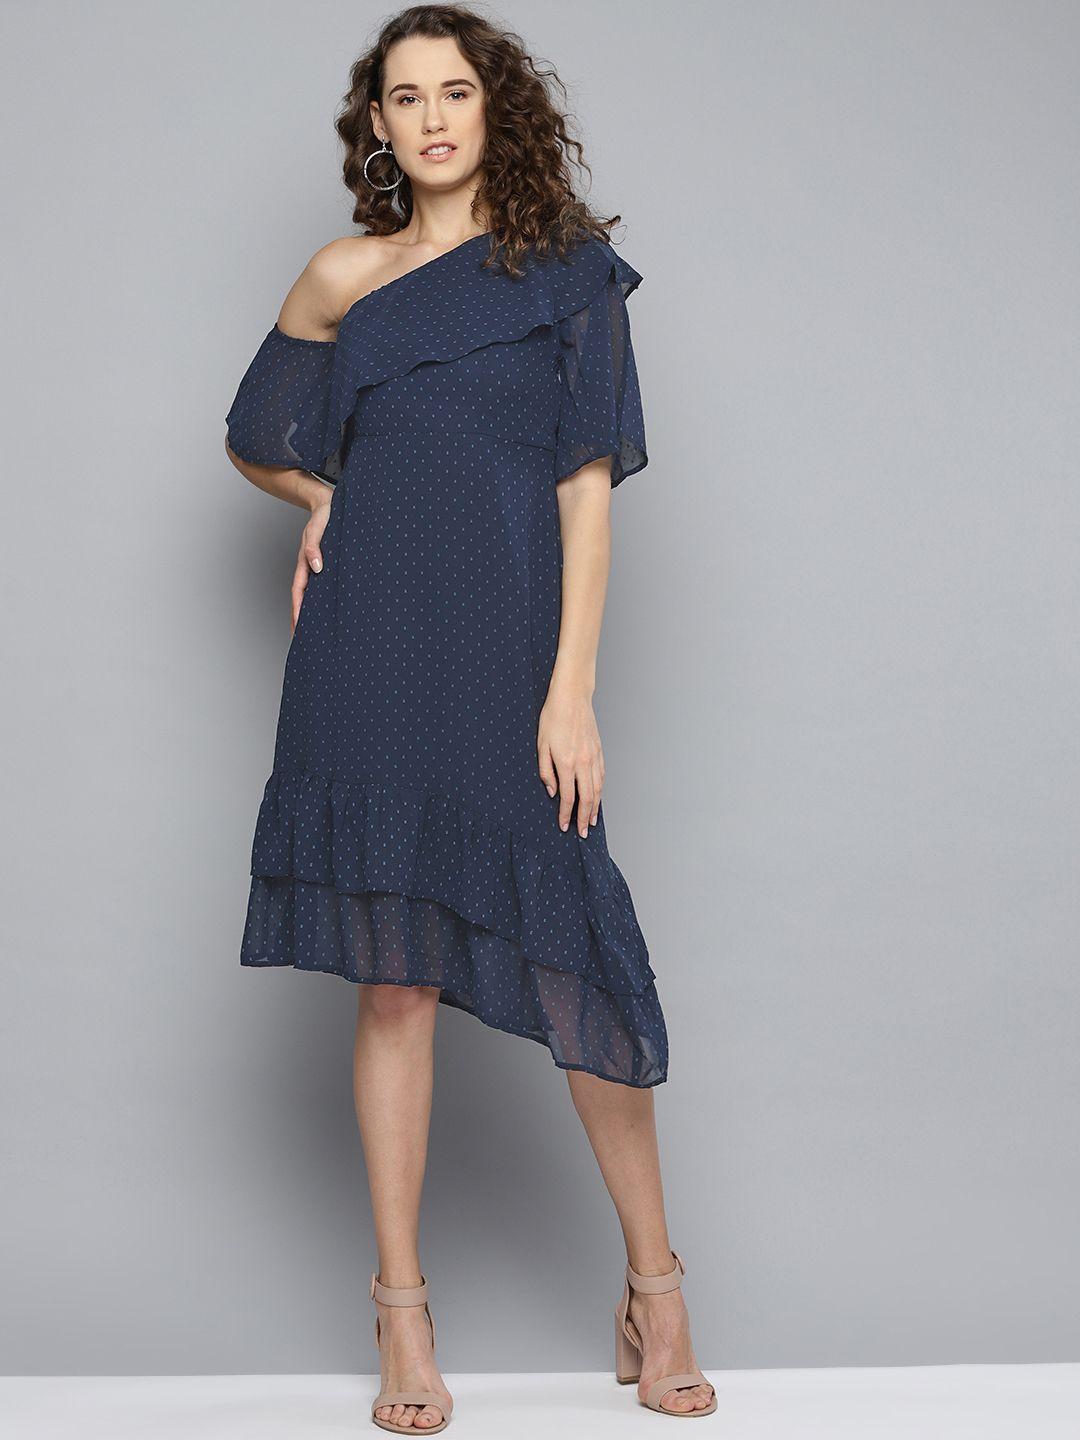 marie claire women navy blue self design one shoulder midi a-line dress